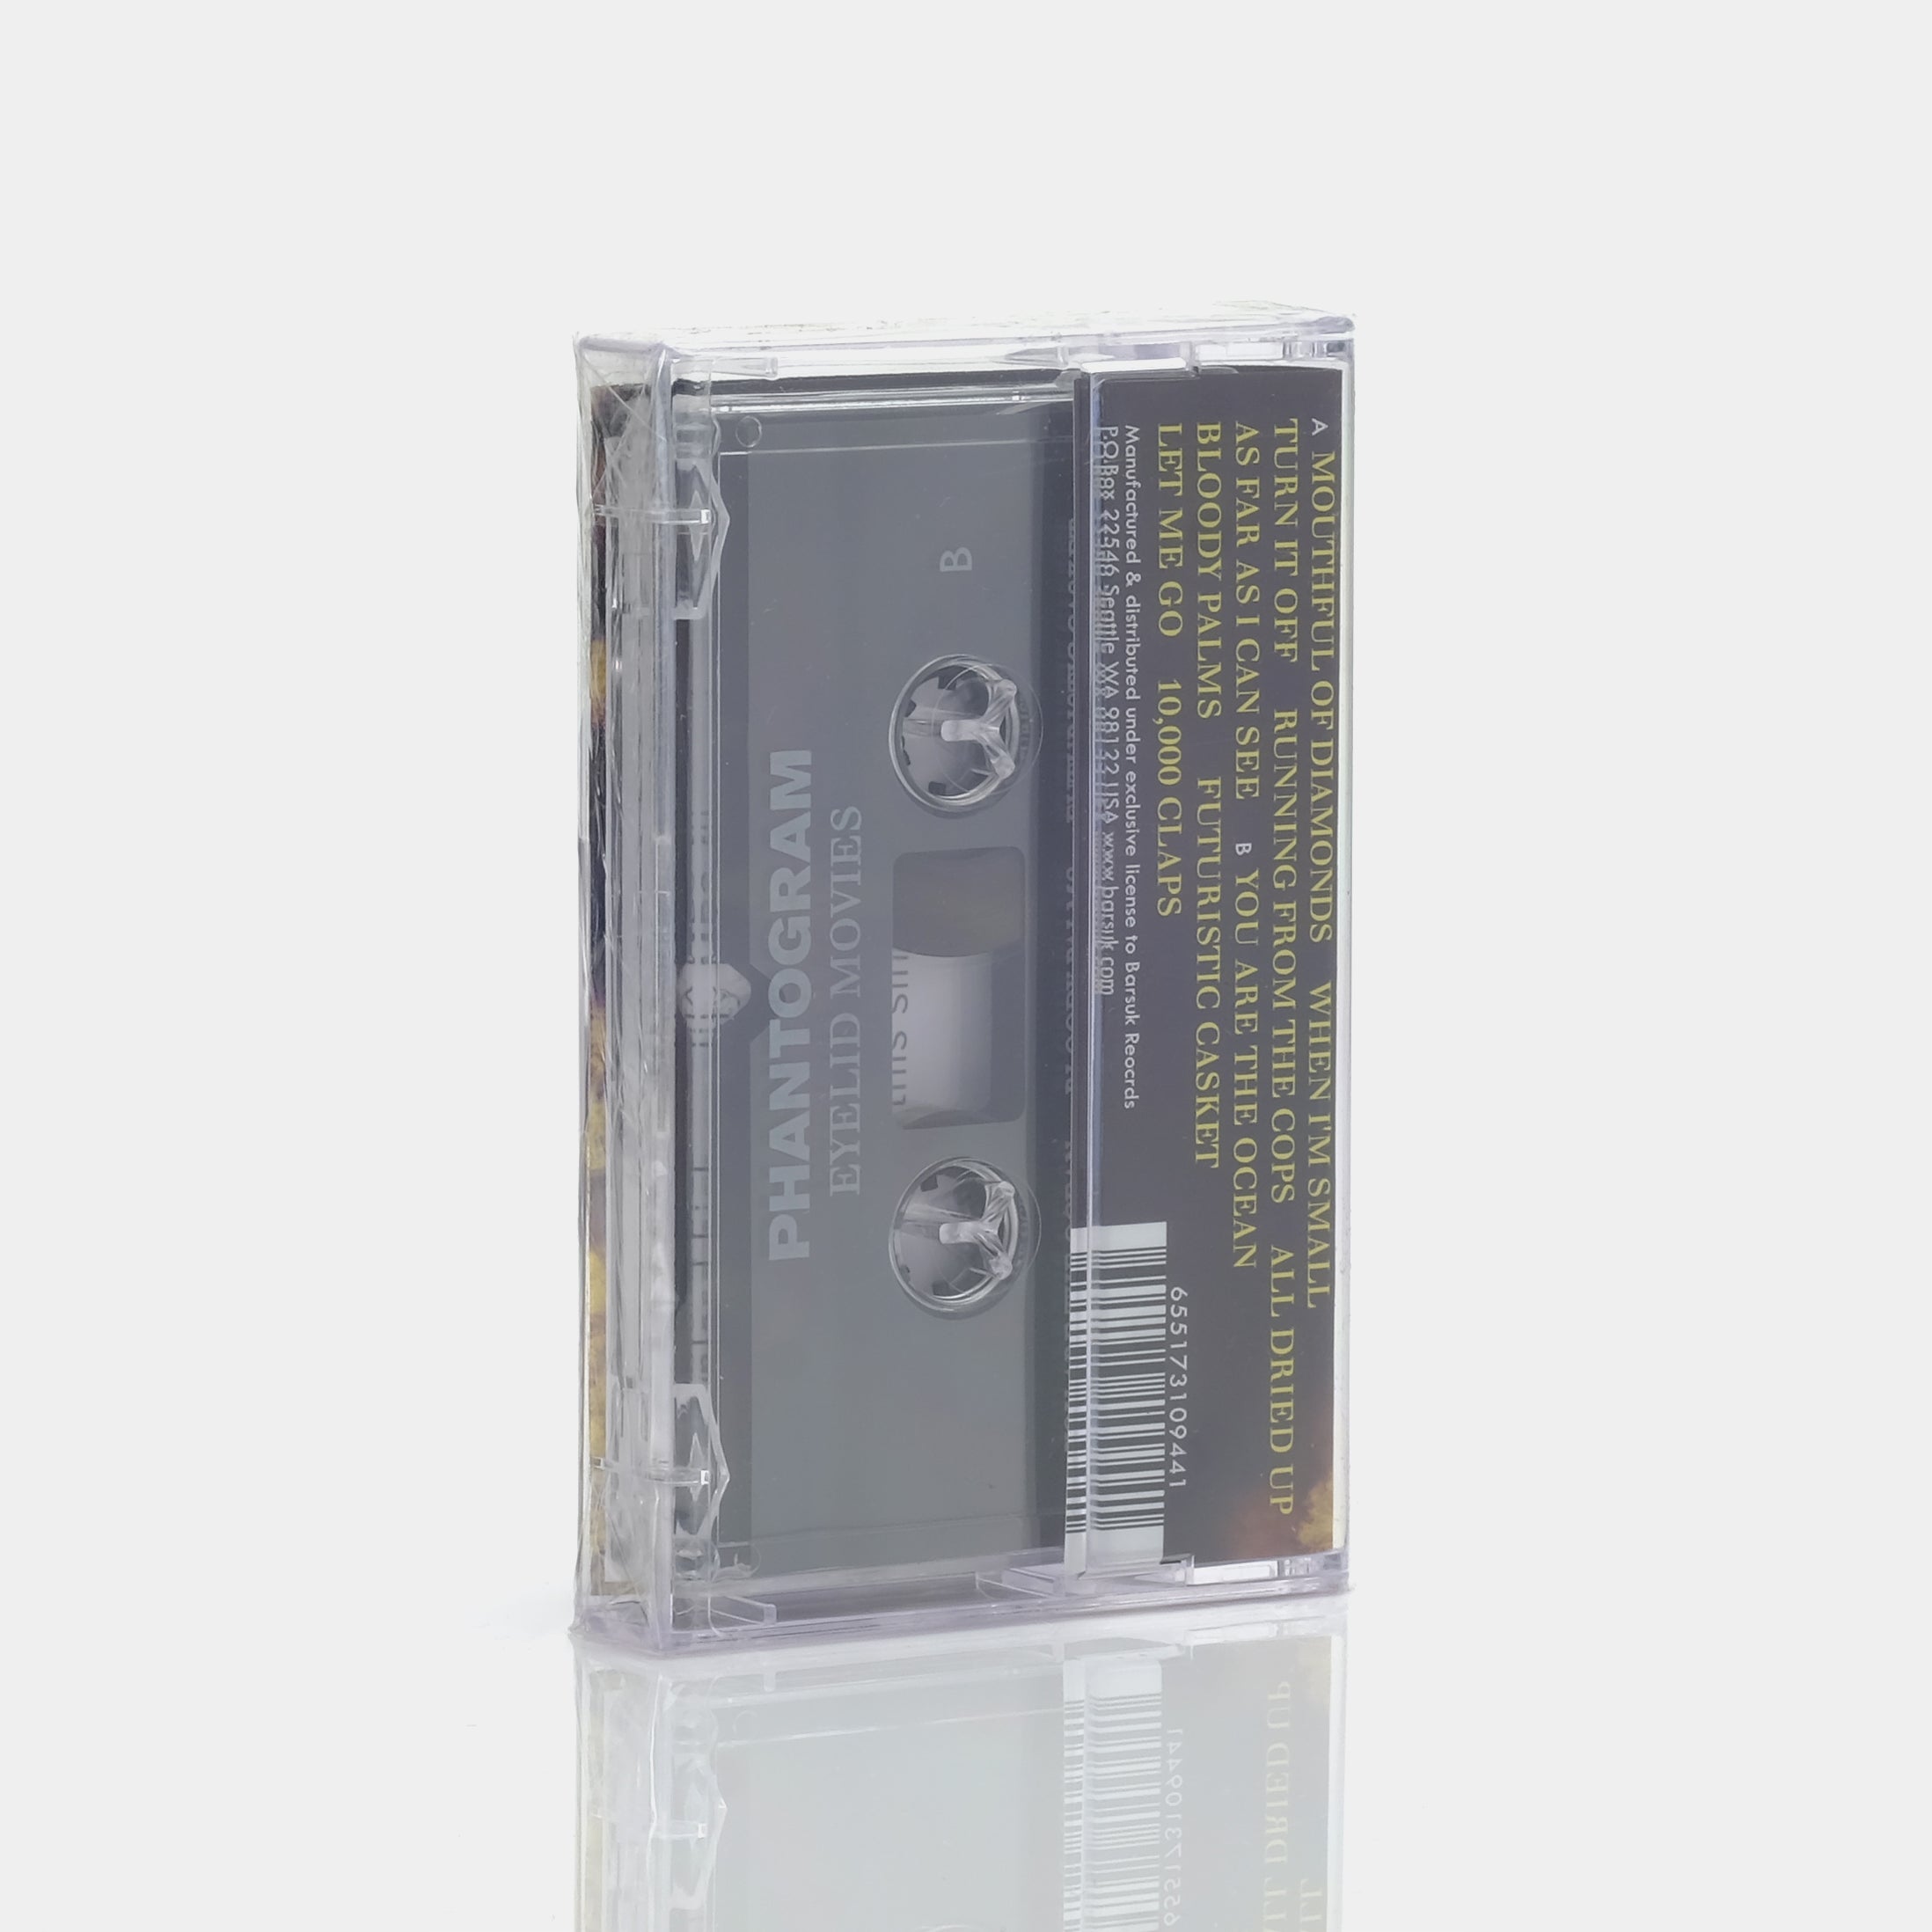 Phantogram - Eyelid Movies Cassette Tape